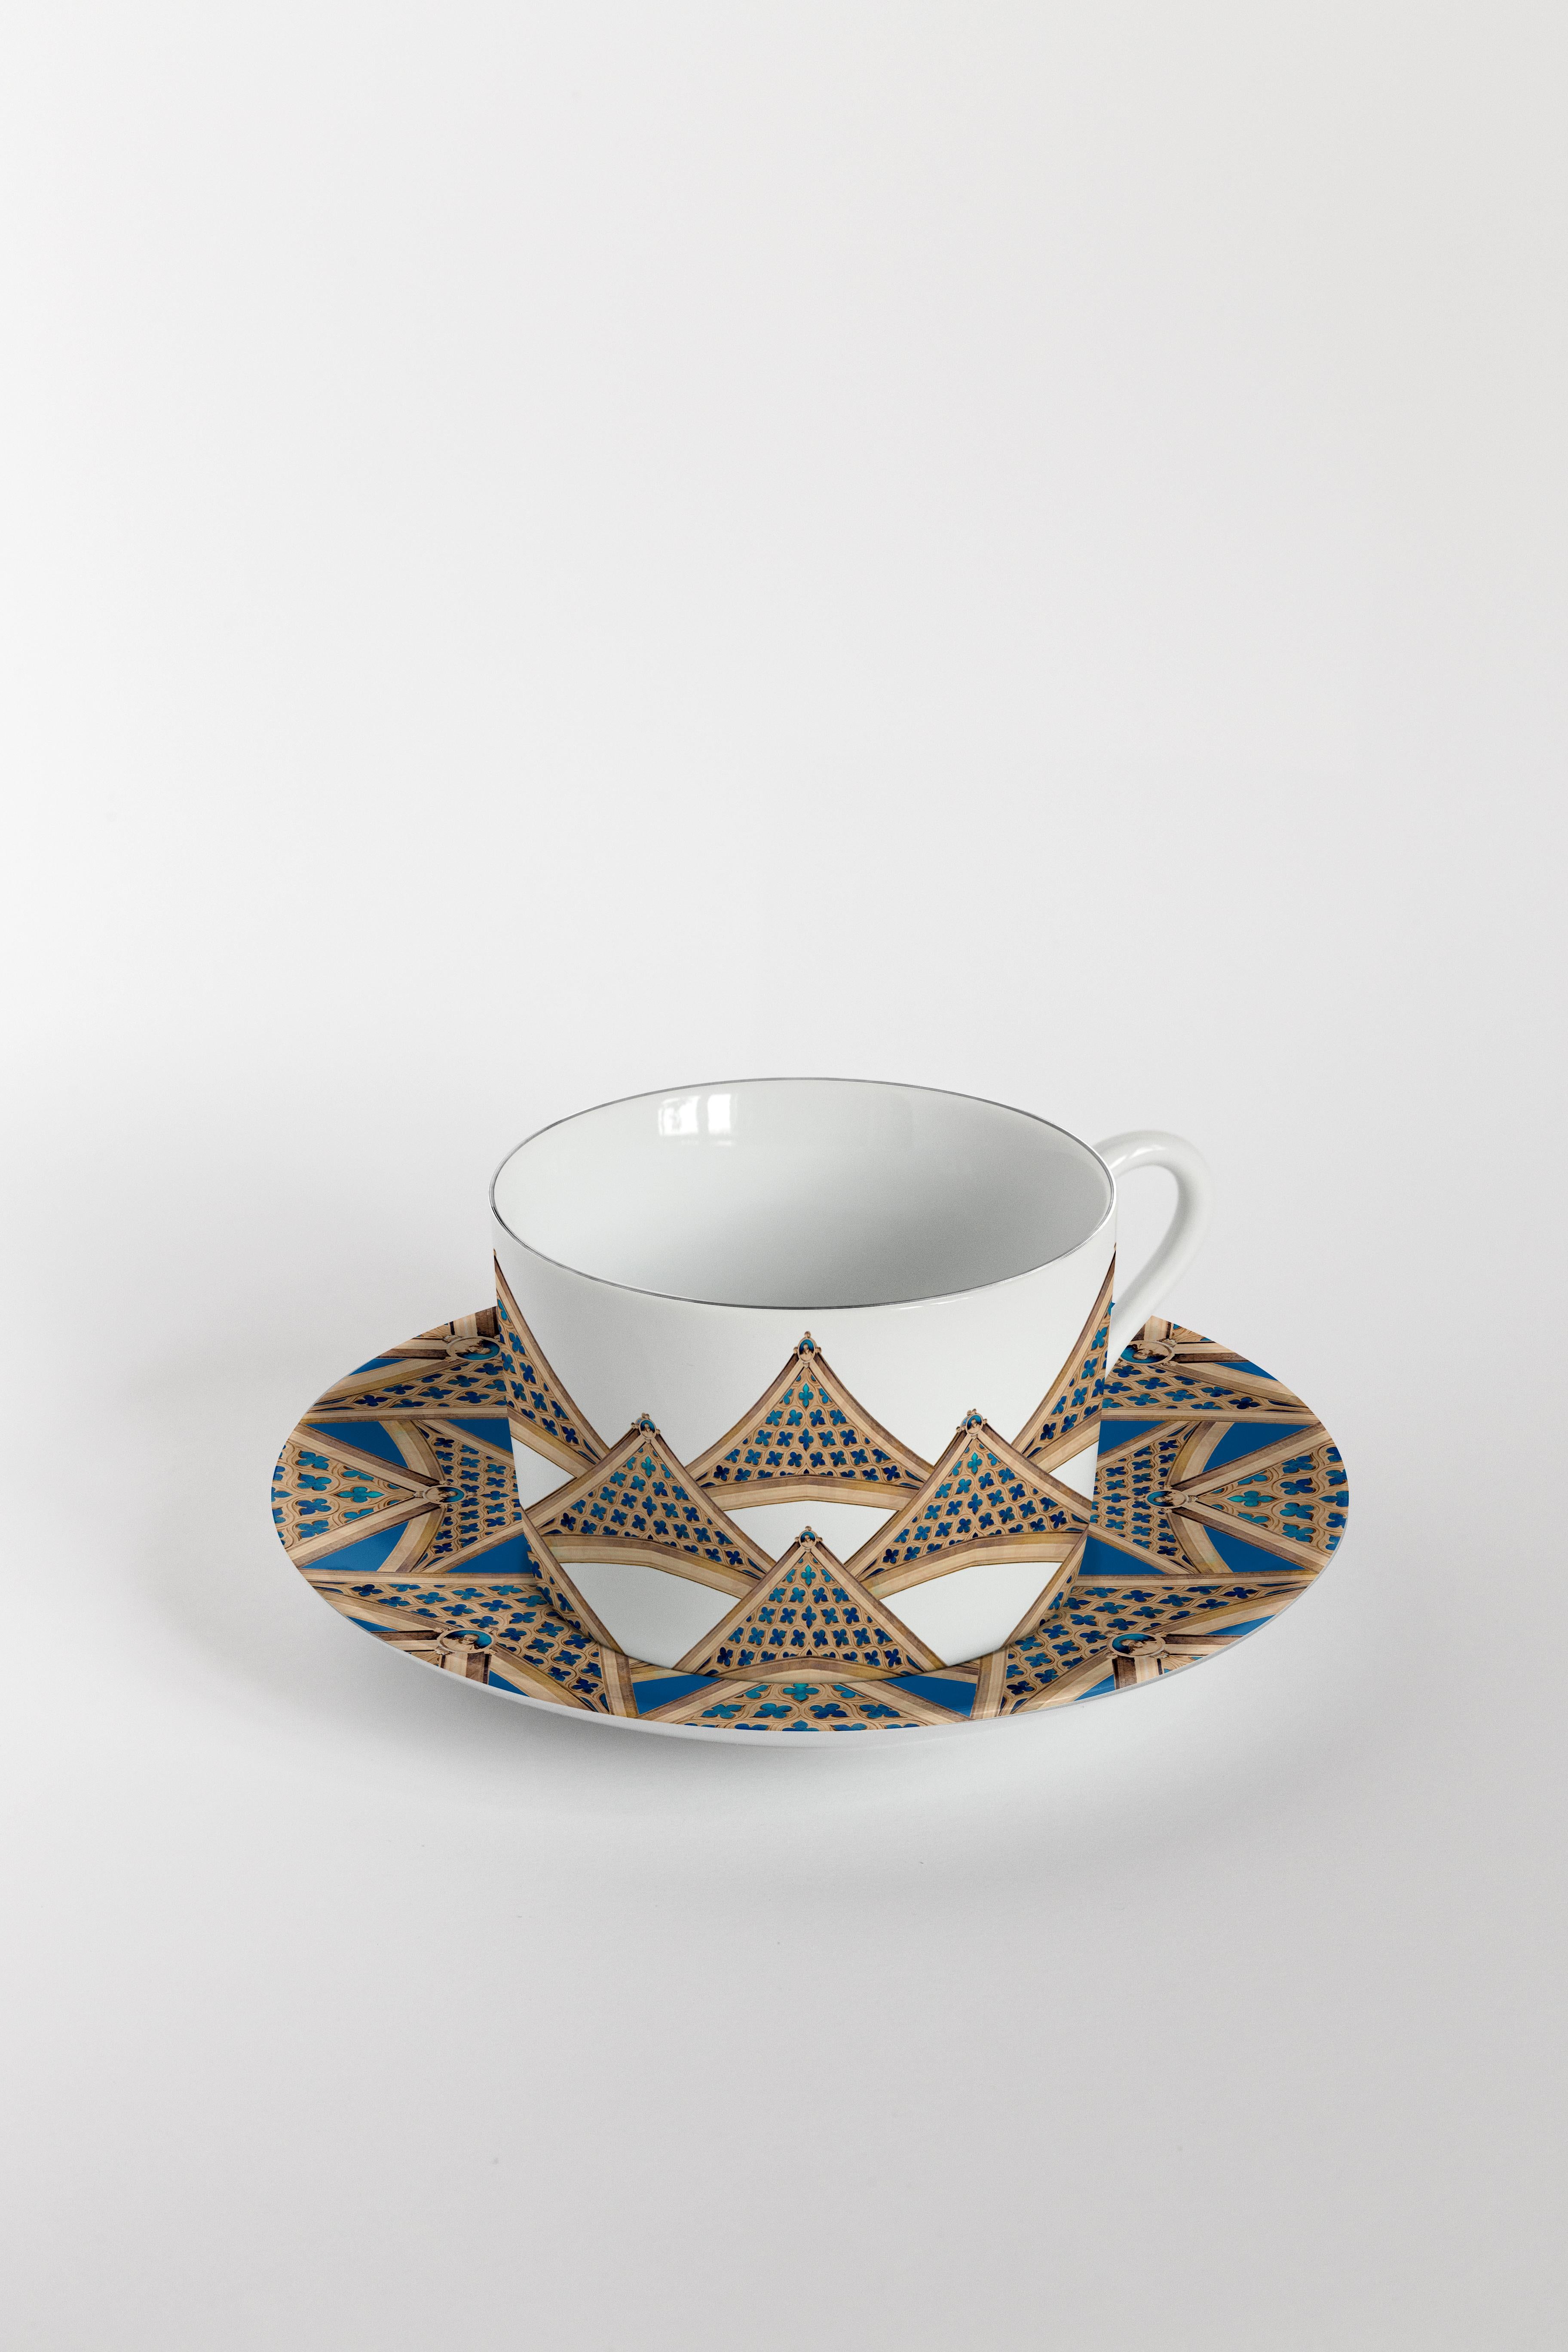 Le Volte Celesti, Six Contemporary Decorated Tea Cups with Plates For Sale 1